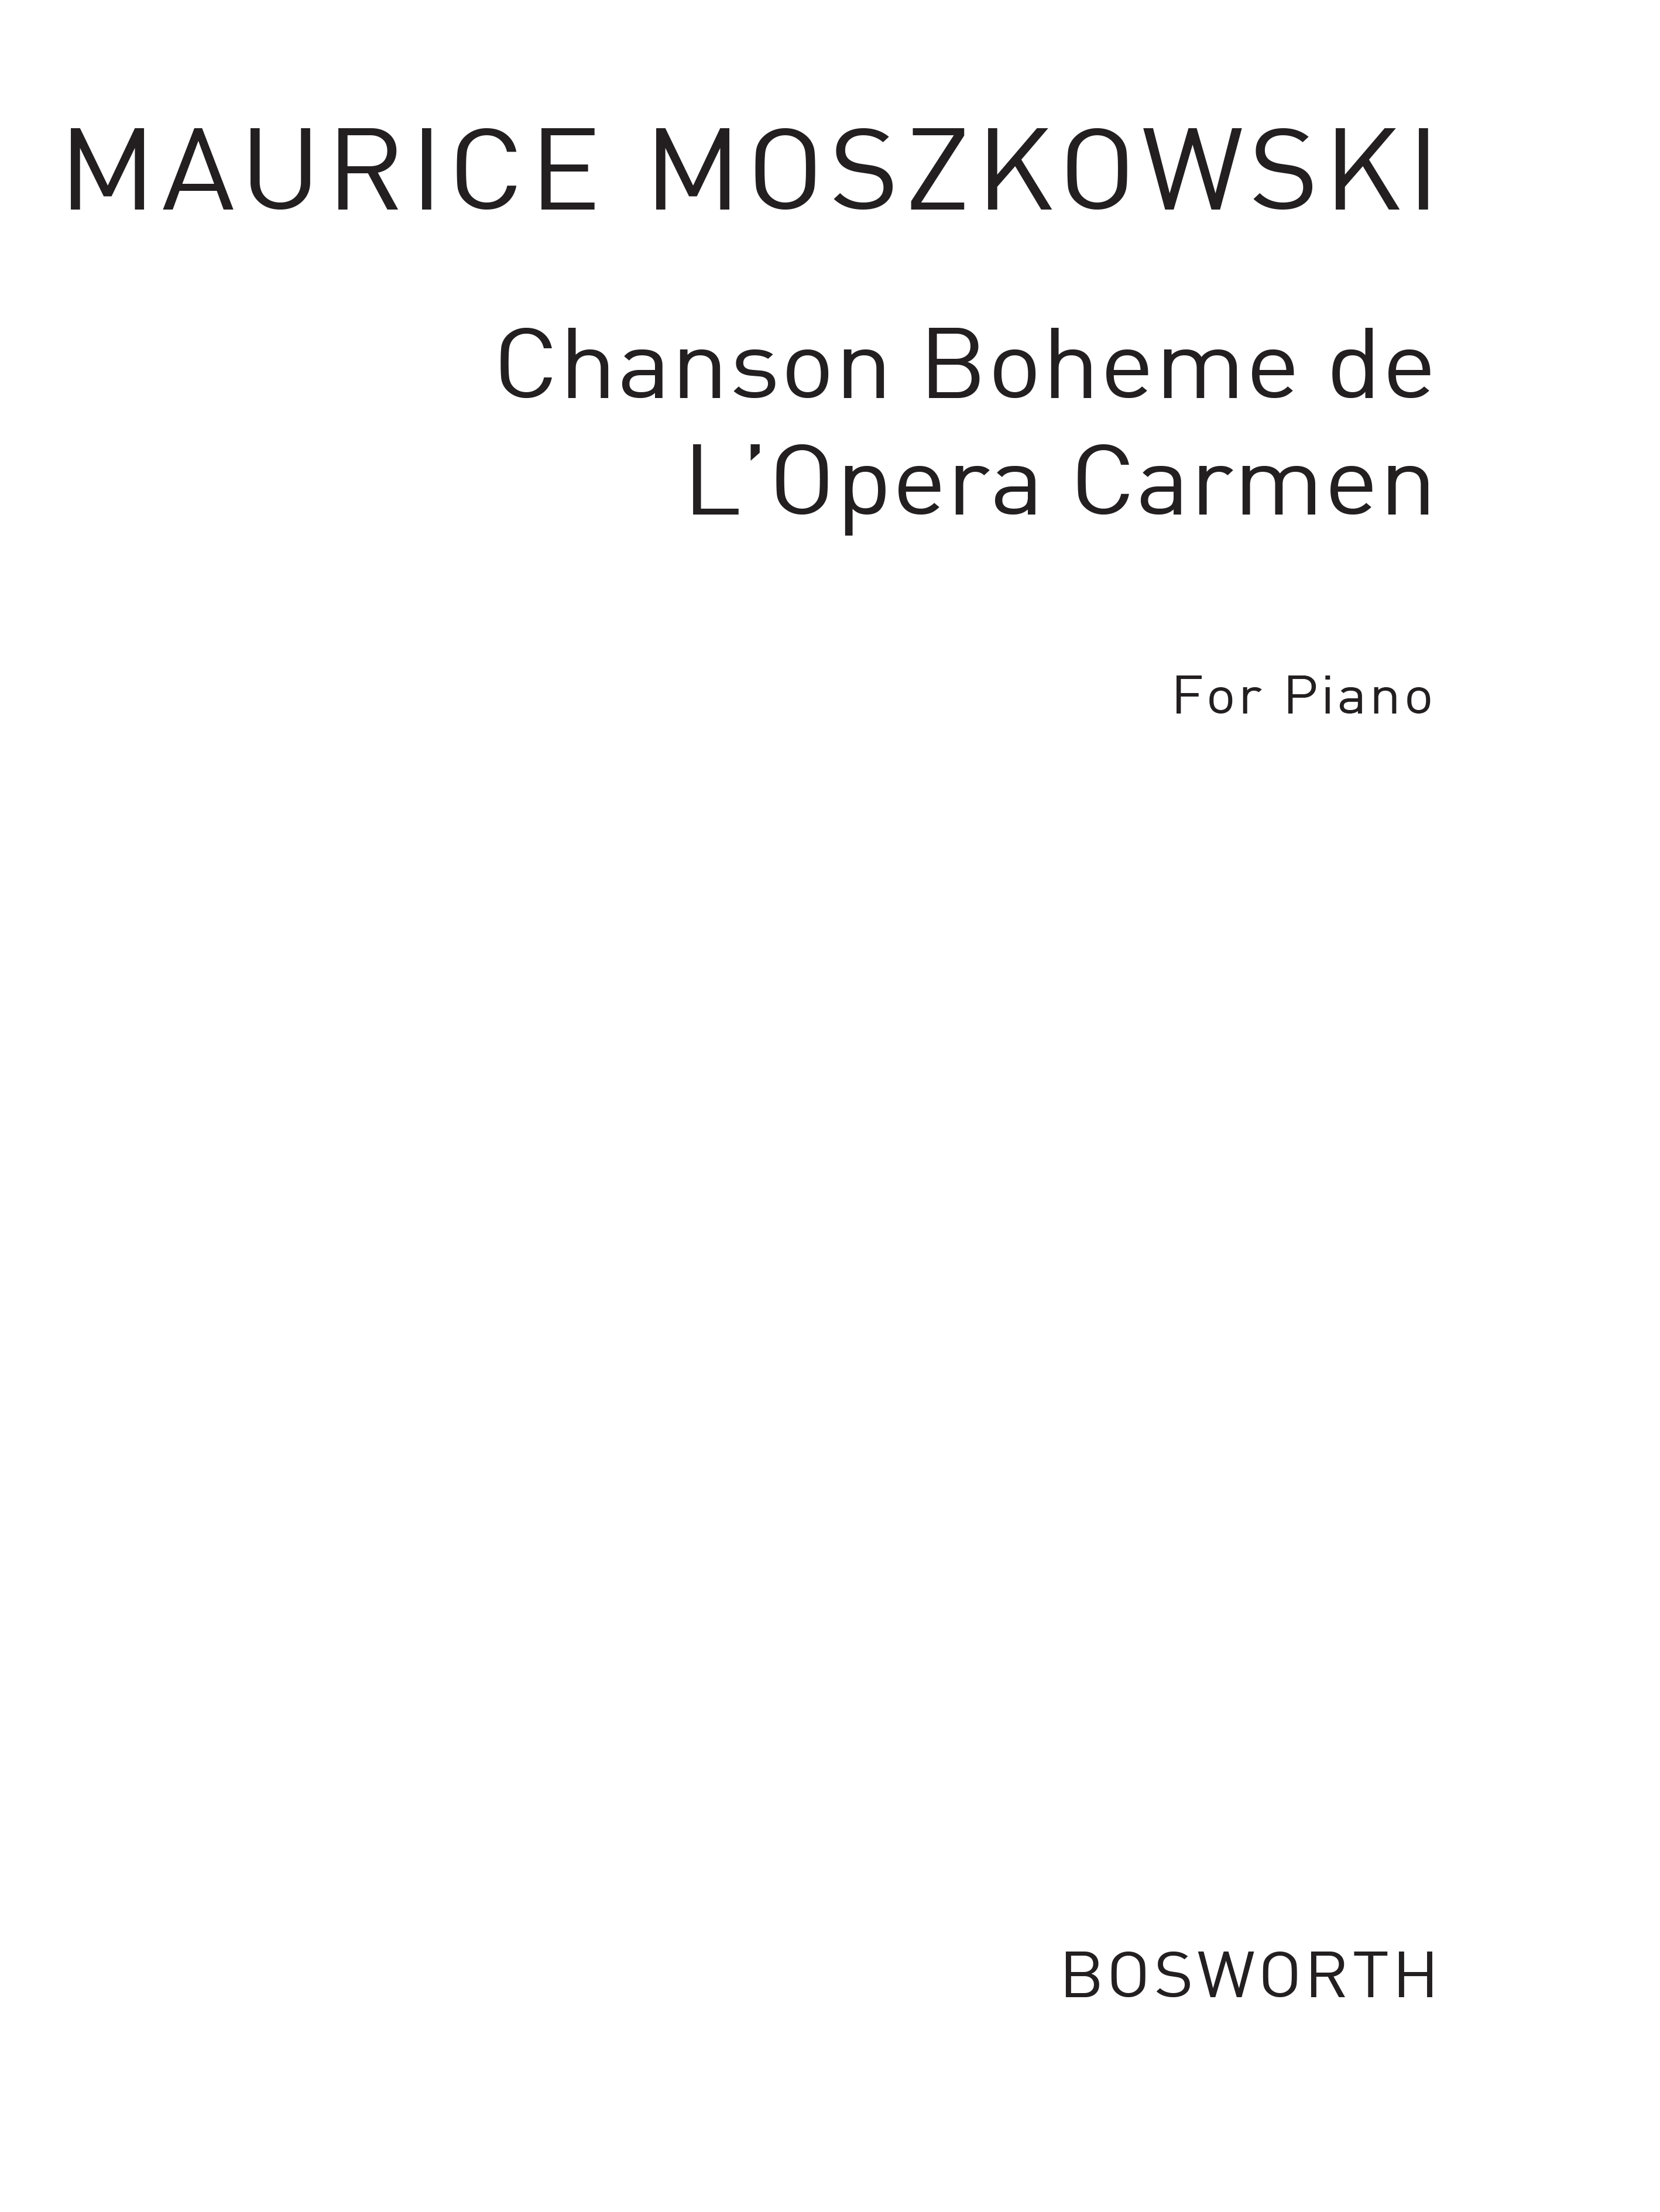 Moritz Moszkowski: Chanson Boheme From Carmen: Piano: Instrumental Work